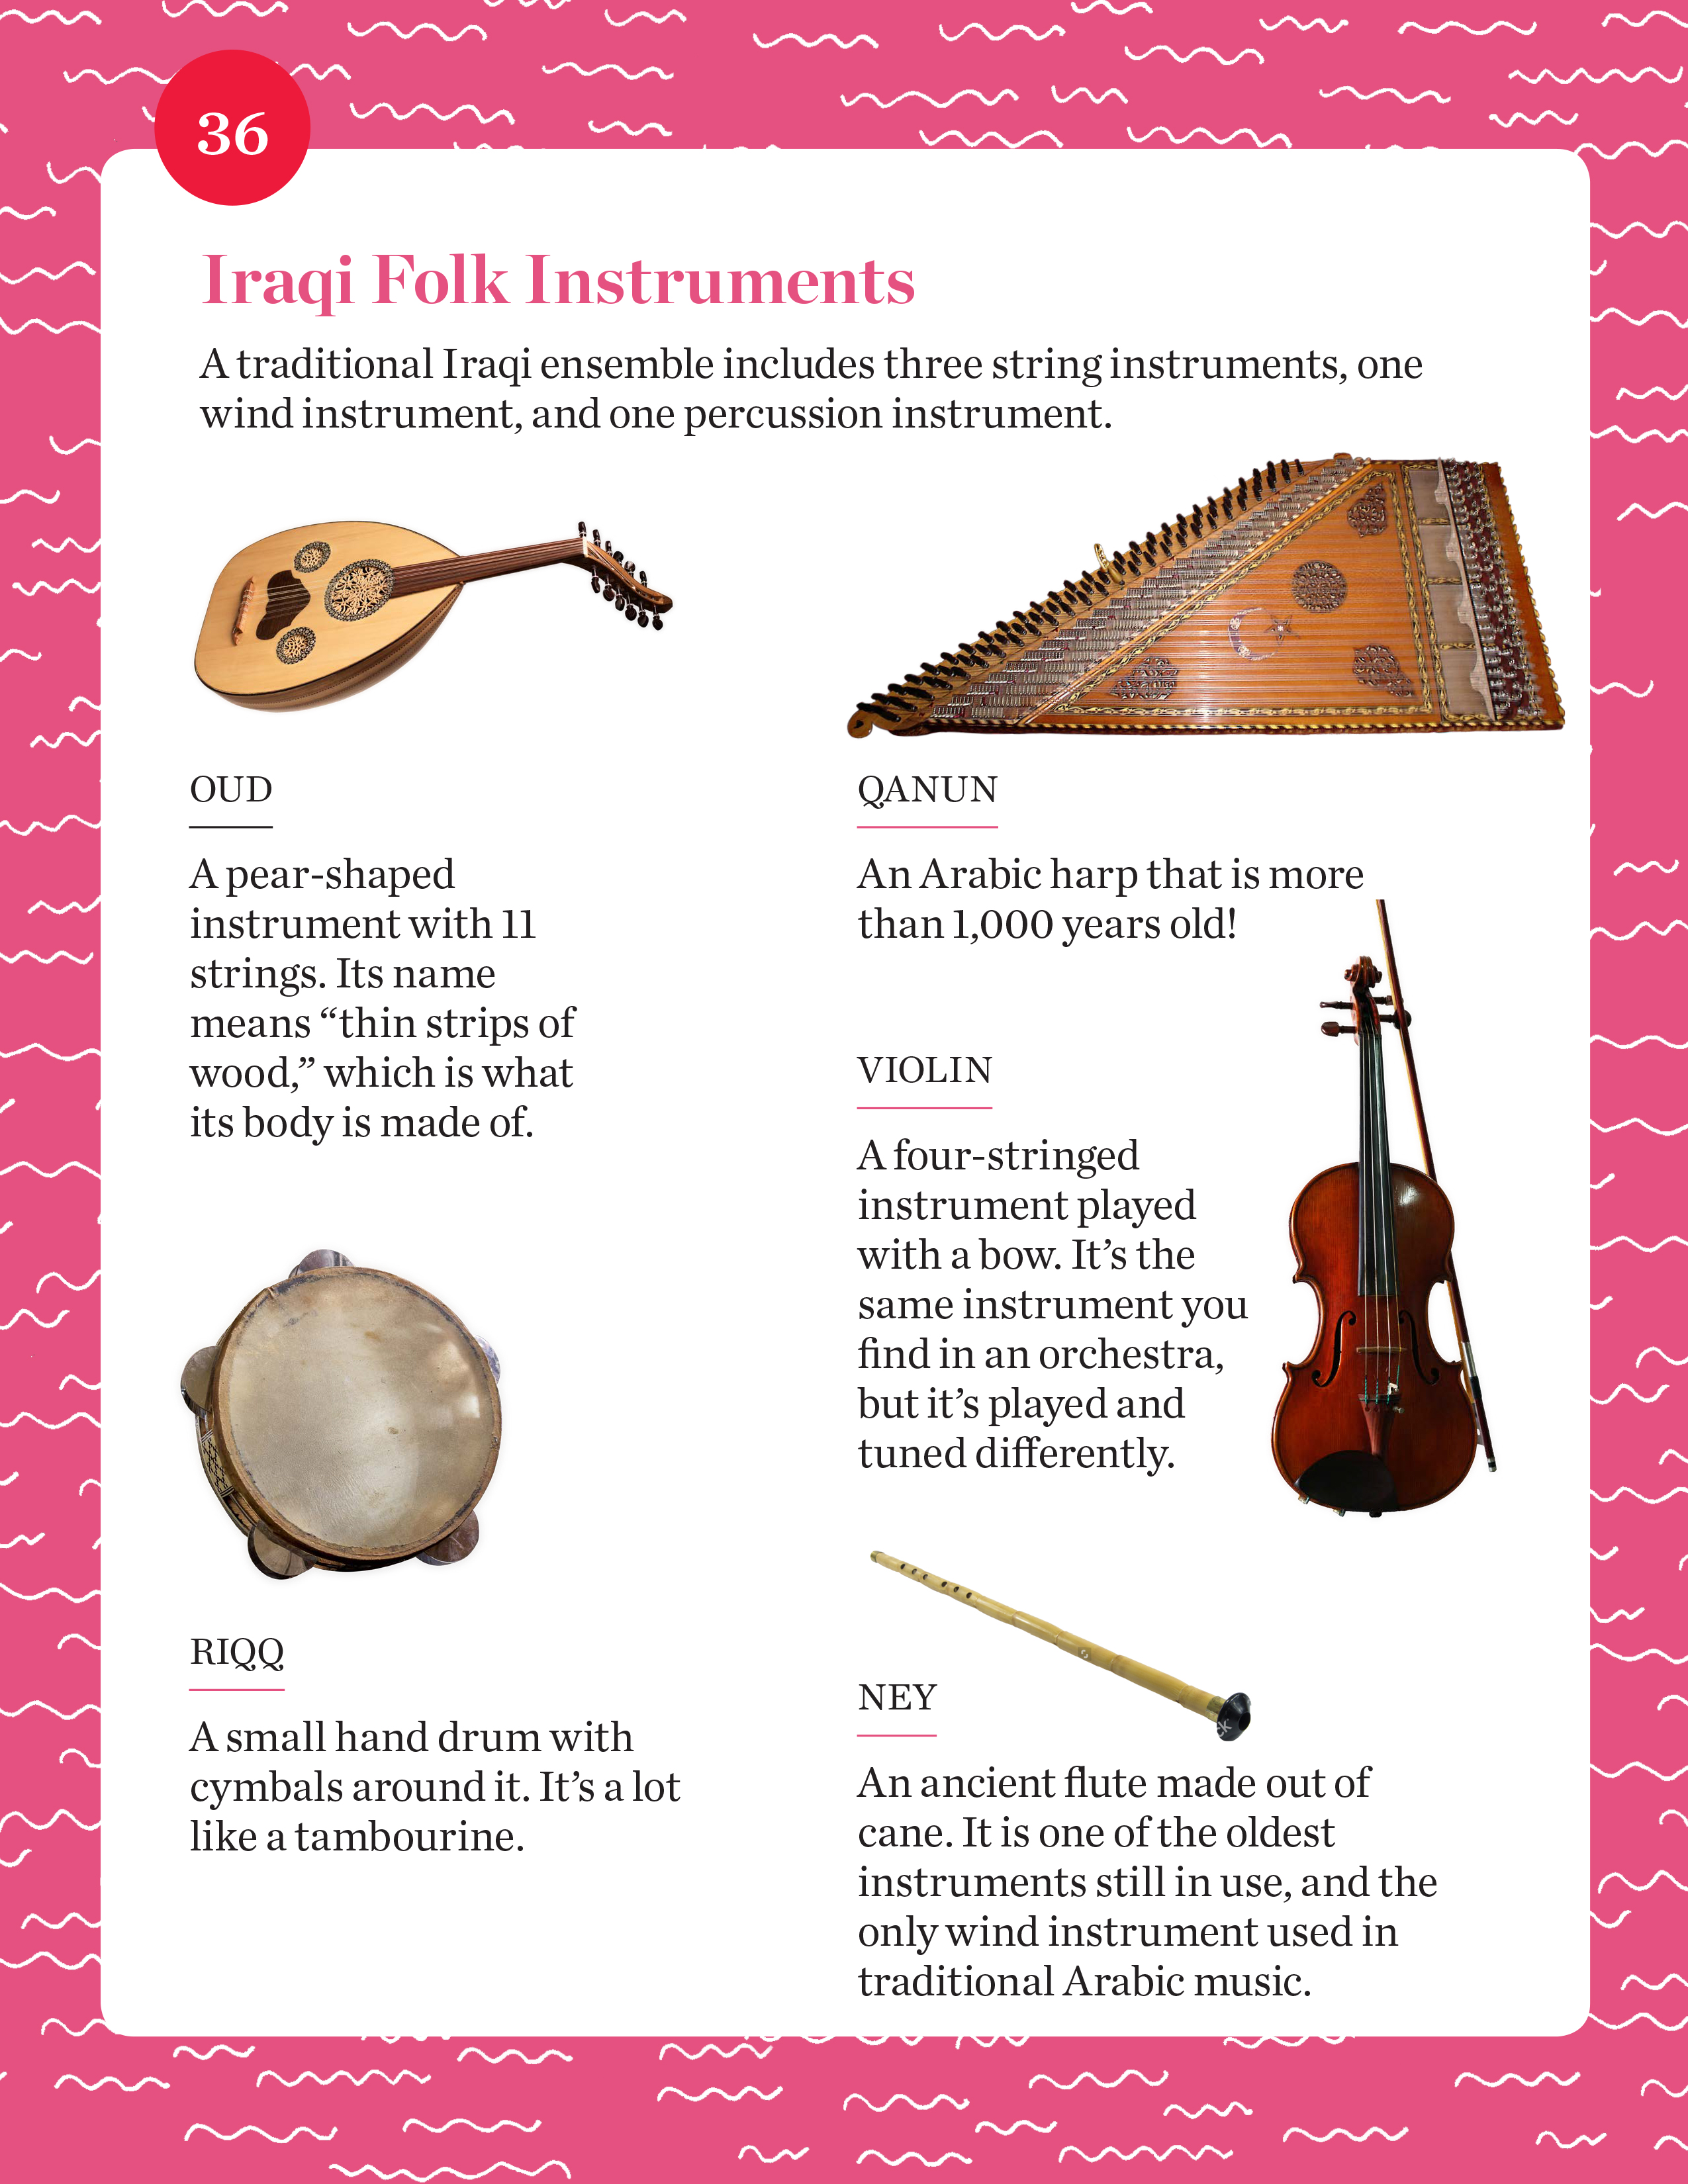 Iraqi Folk Instruments student activity